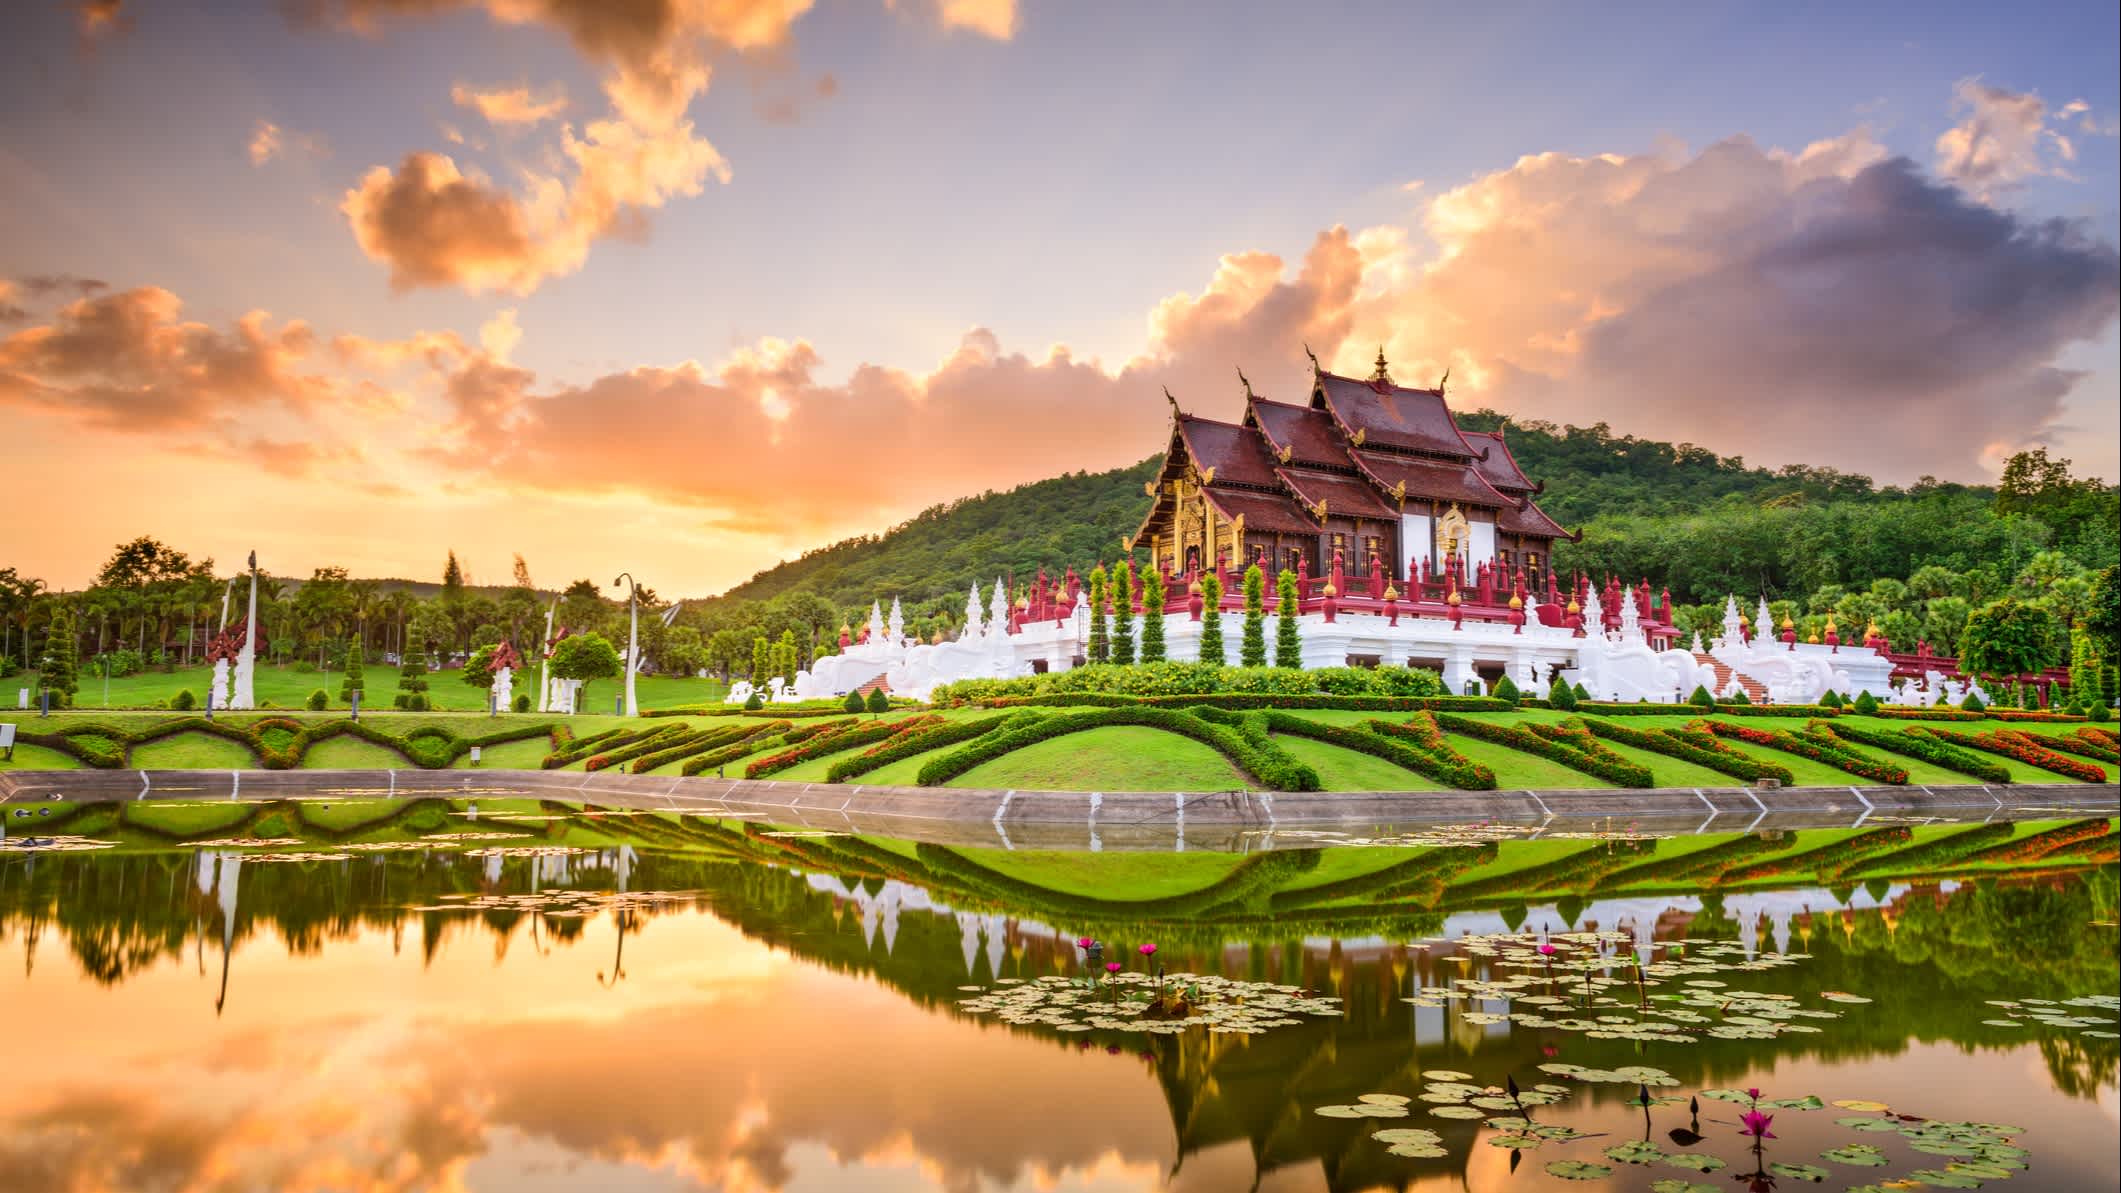 Royal Flora Ratchaphruek Park im Chiang Mai, Thailand.

